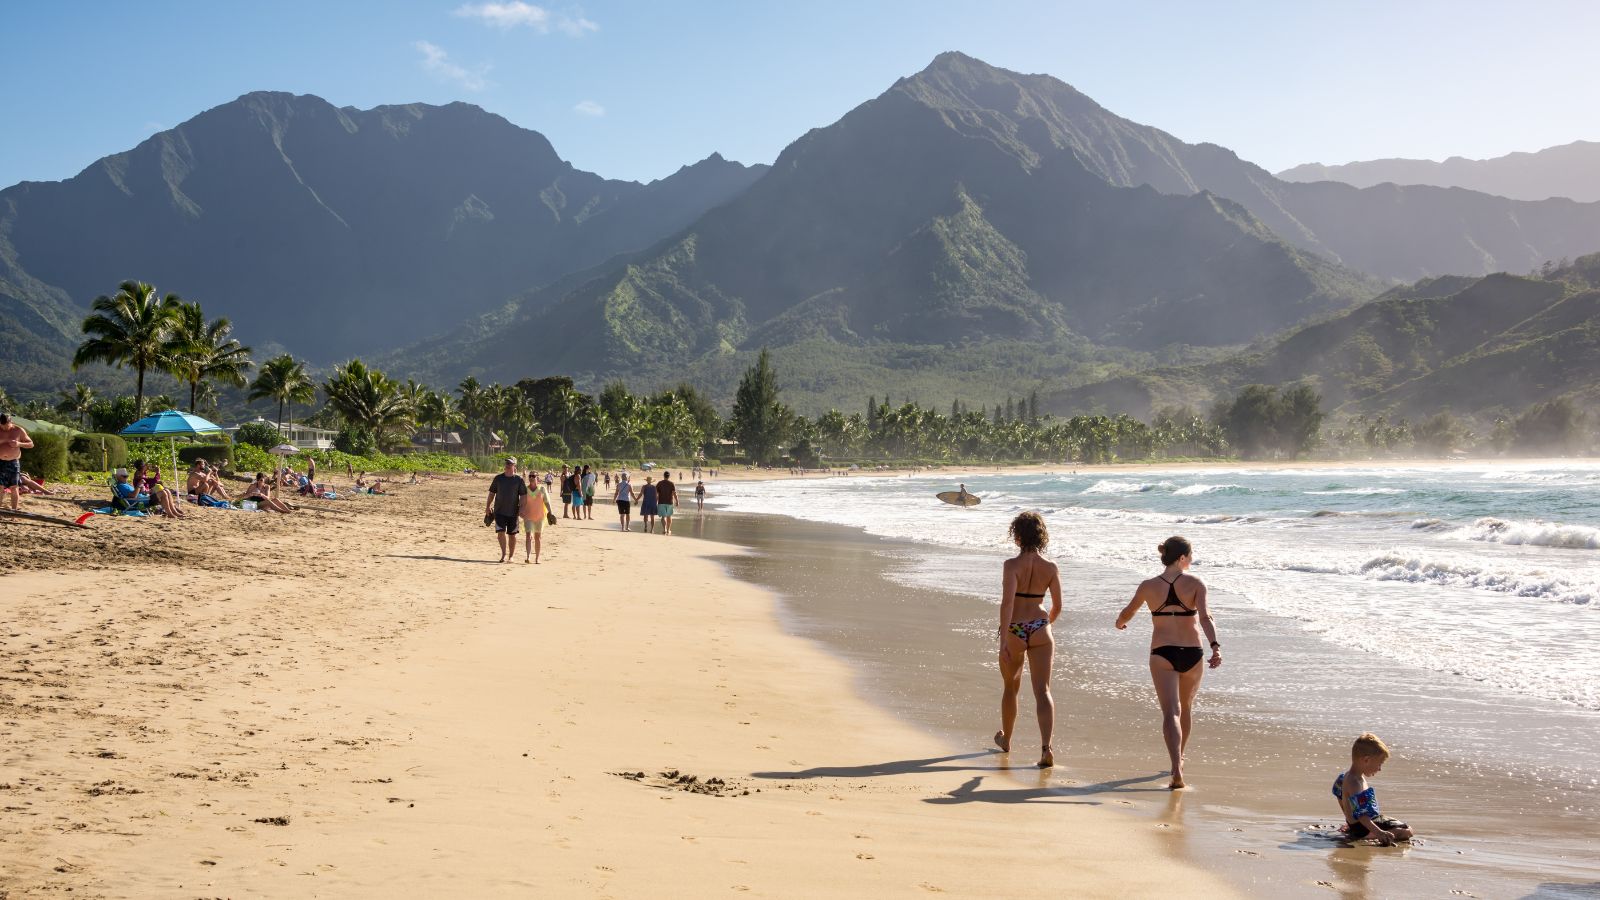 Family on a beach in Kauai, Hawaii (Photo: Shutterstock)